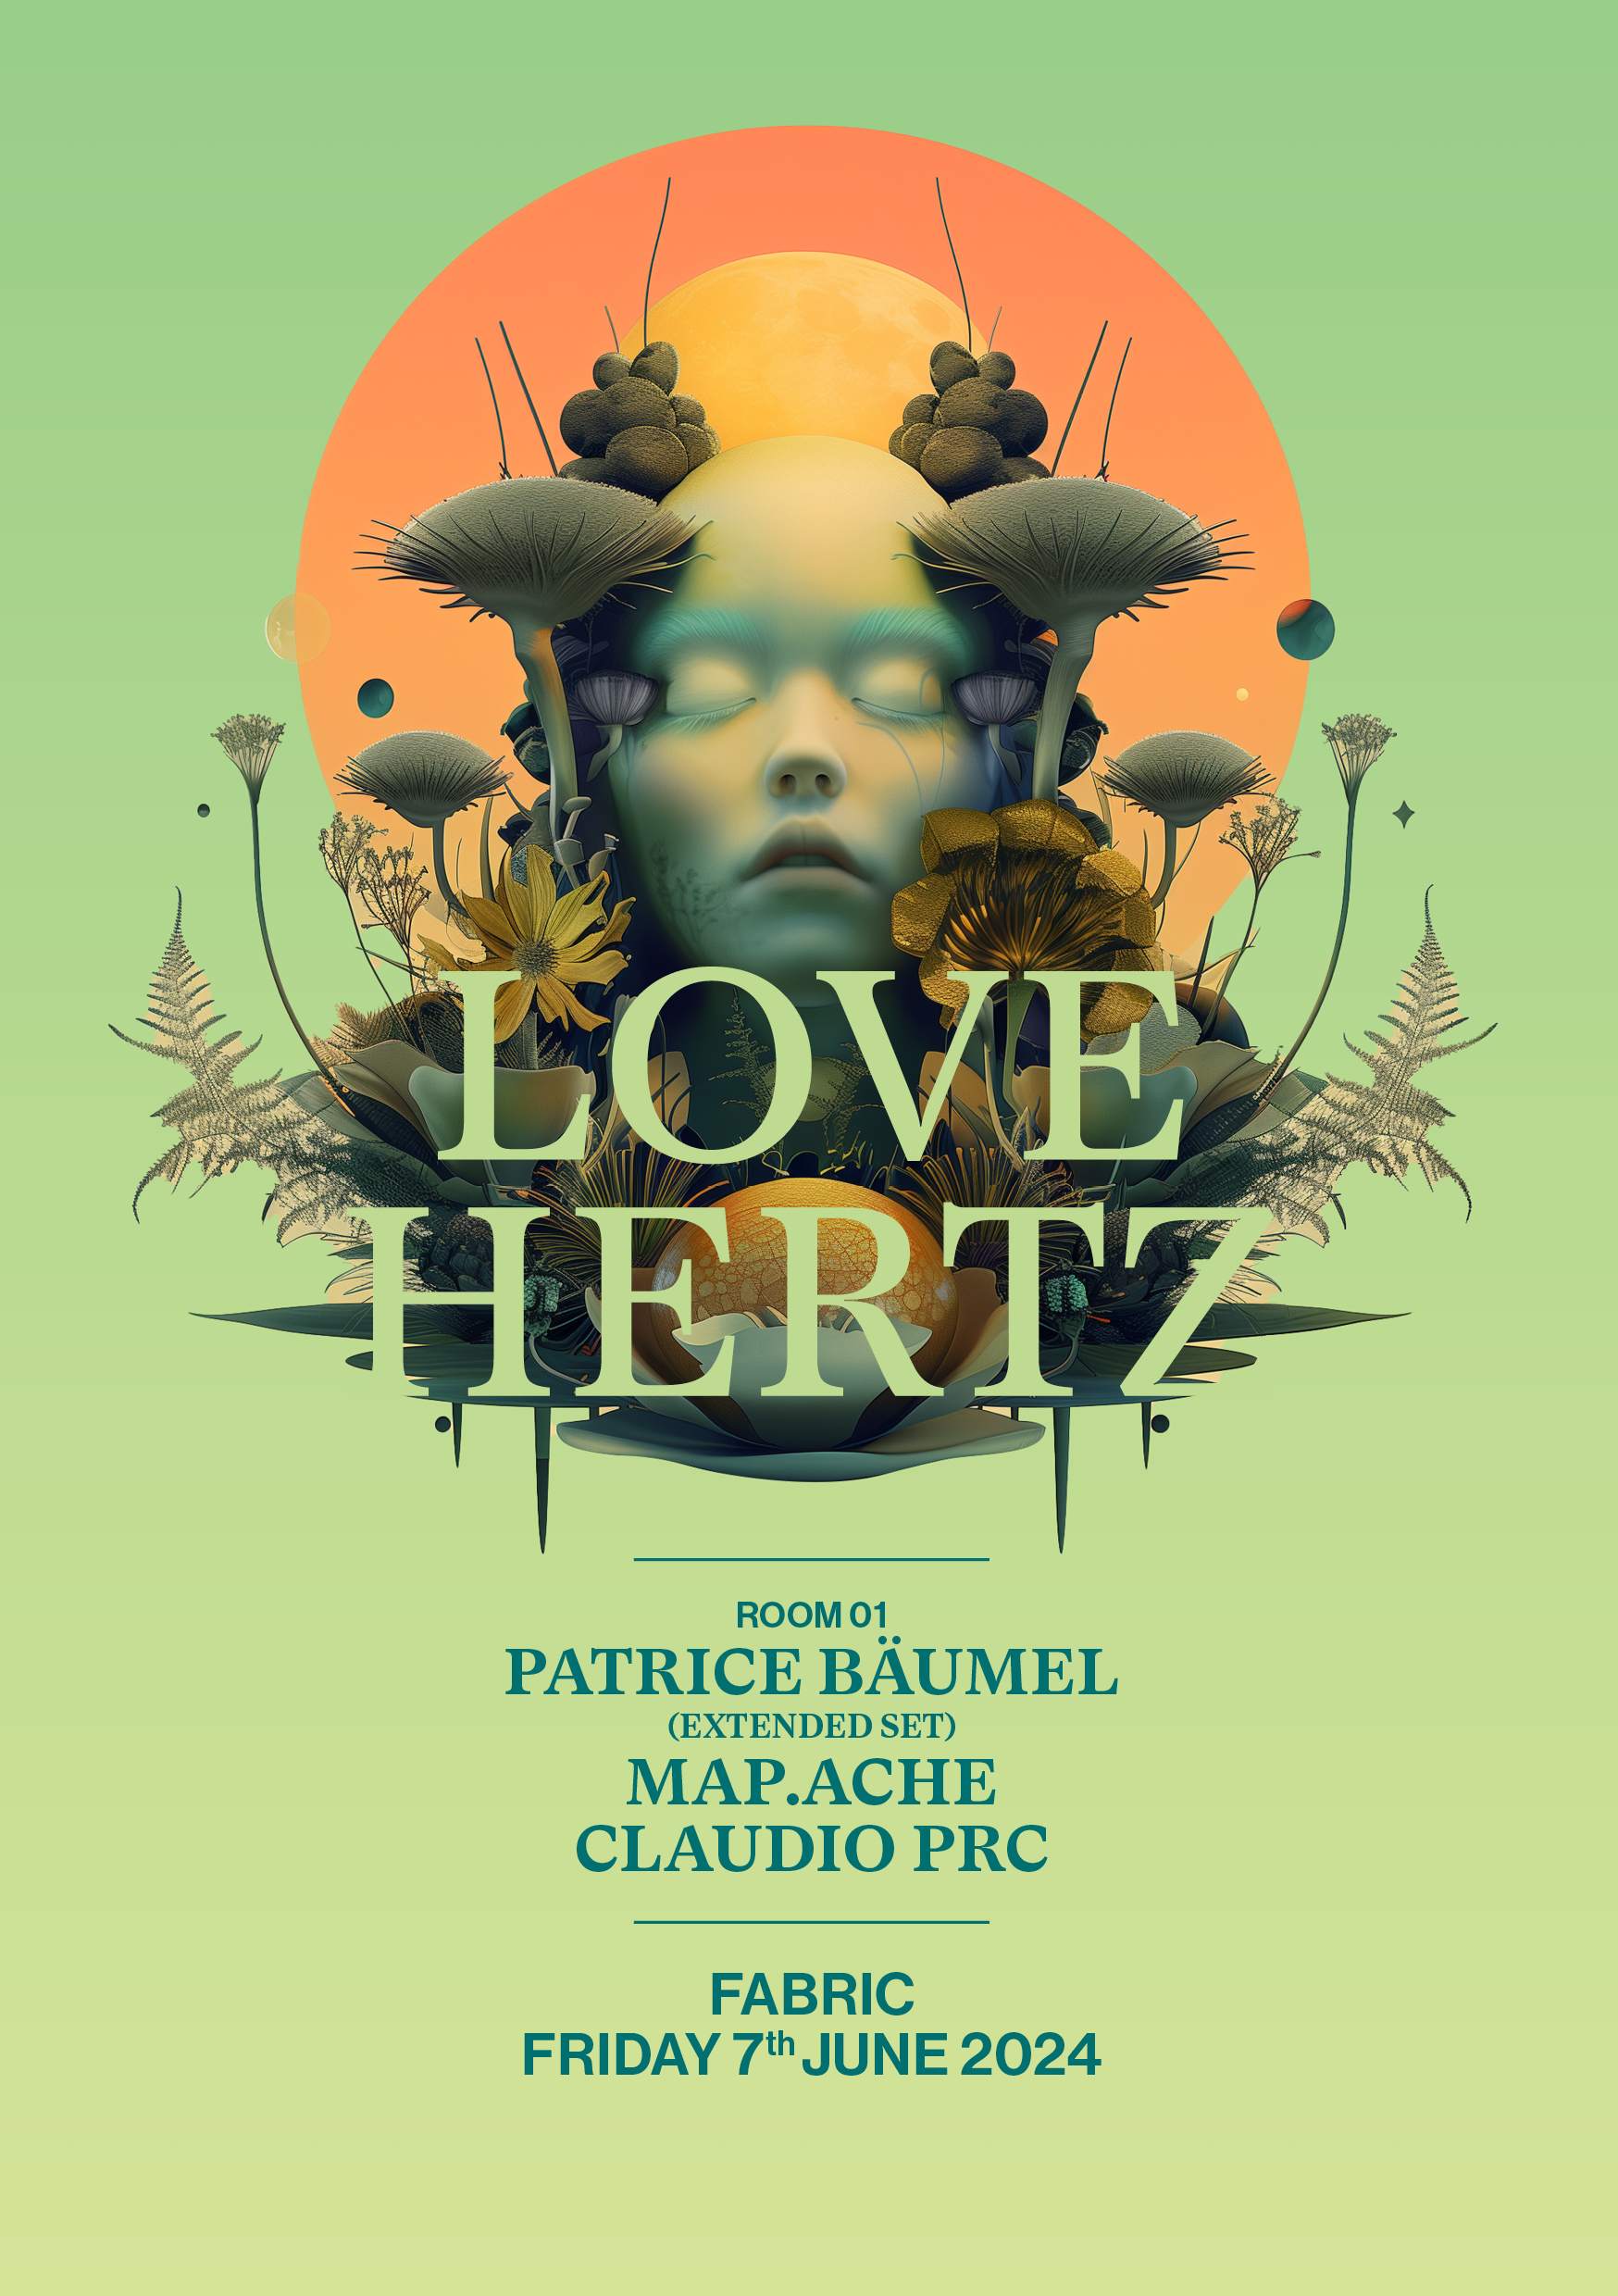 Love Hertz: Patrice Bäumel (Extended Set), Map.ache, Claudio PRC - フライヤー表